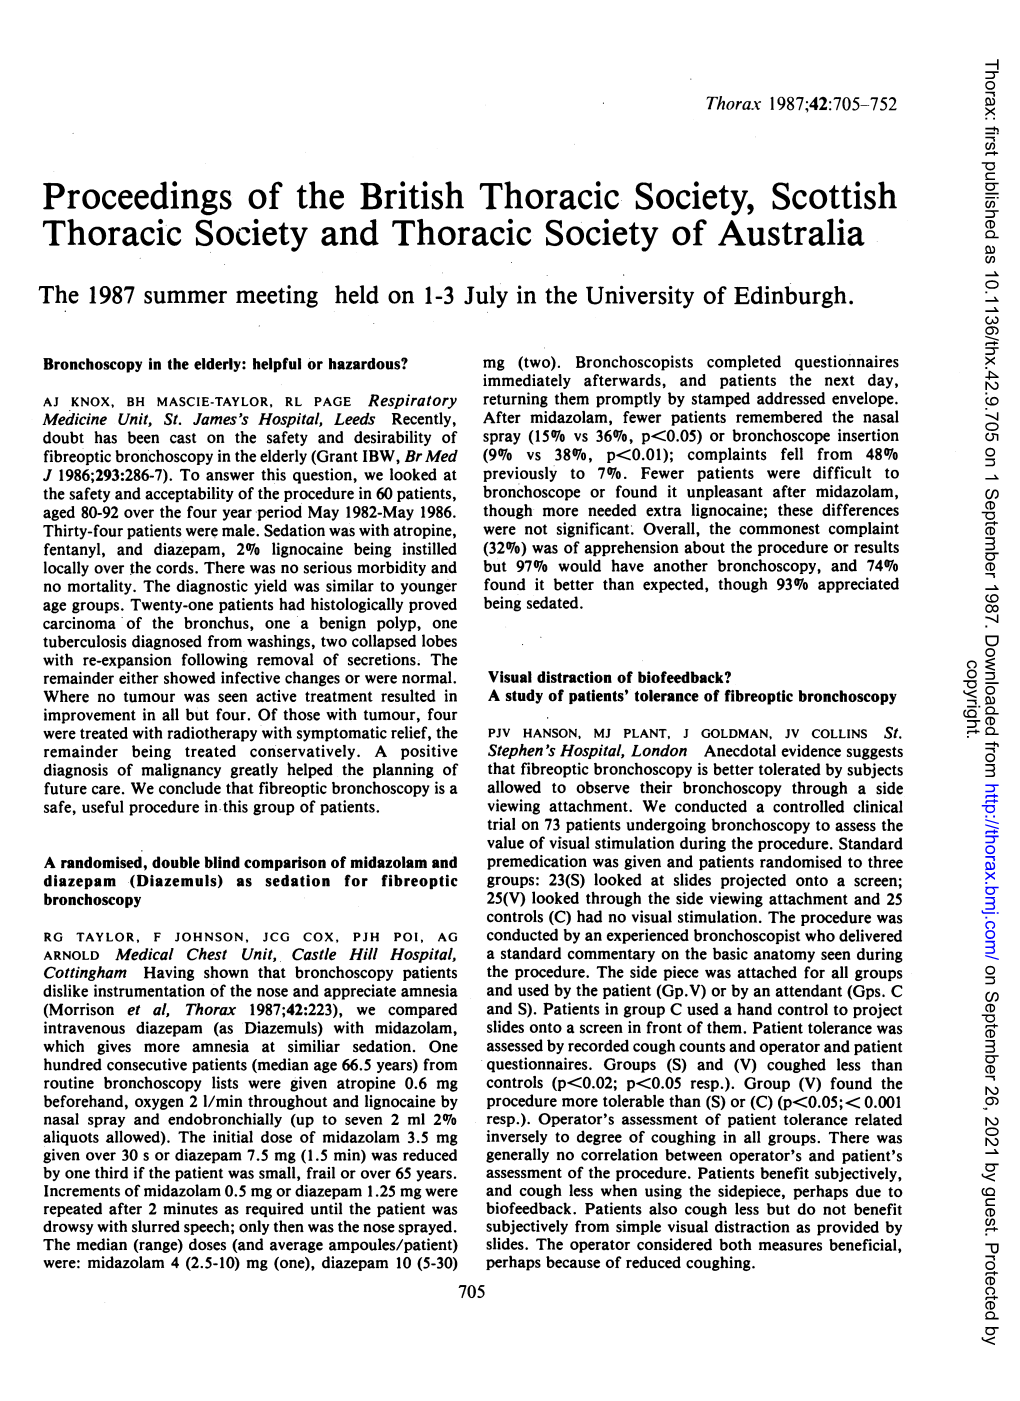 Proceedings of the British Thoracic Society, Scottish Thoracic Society and Thoracic Society of Australia